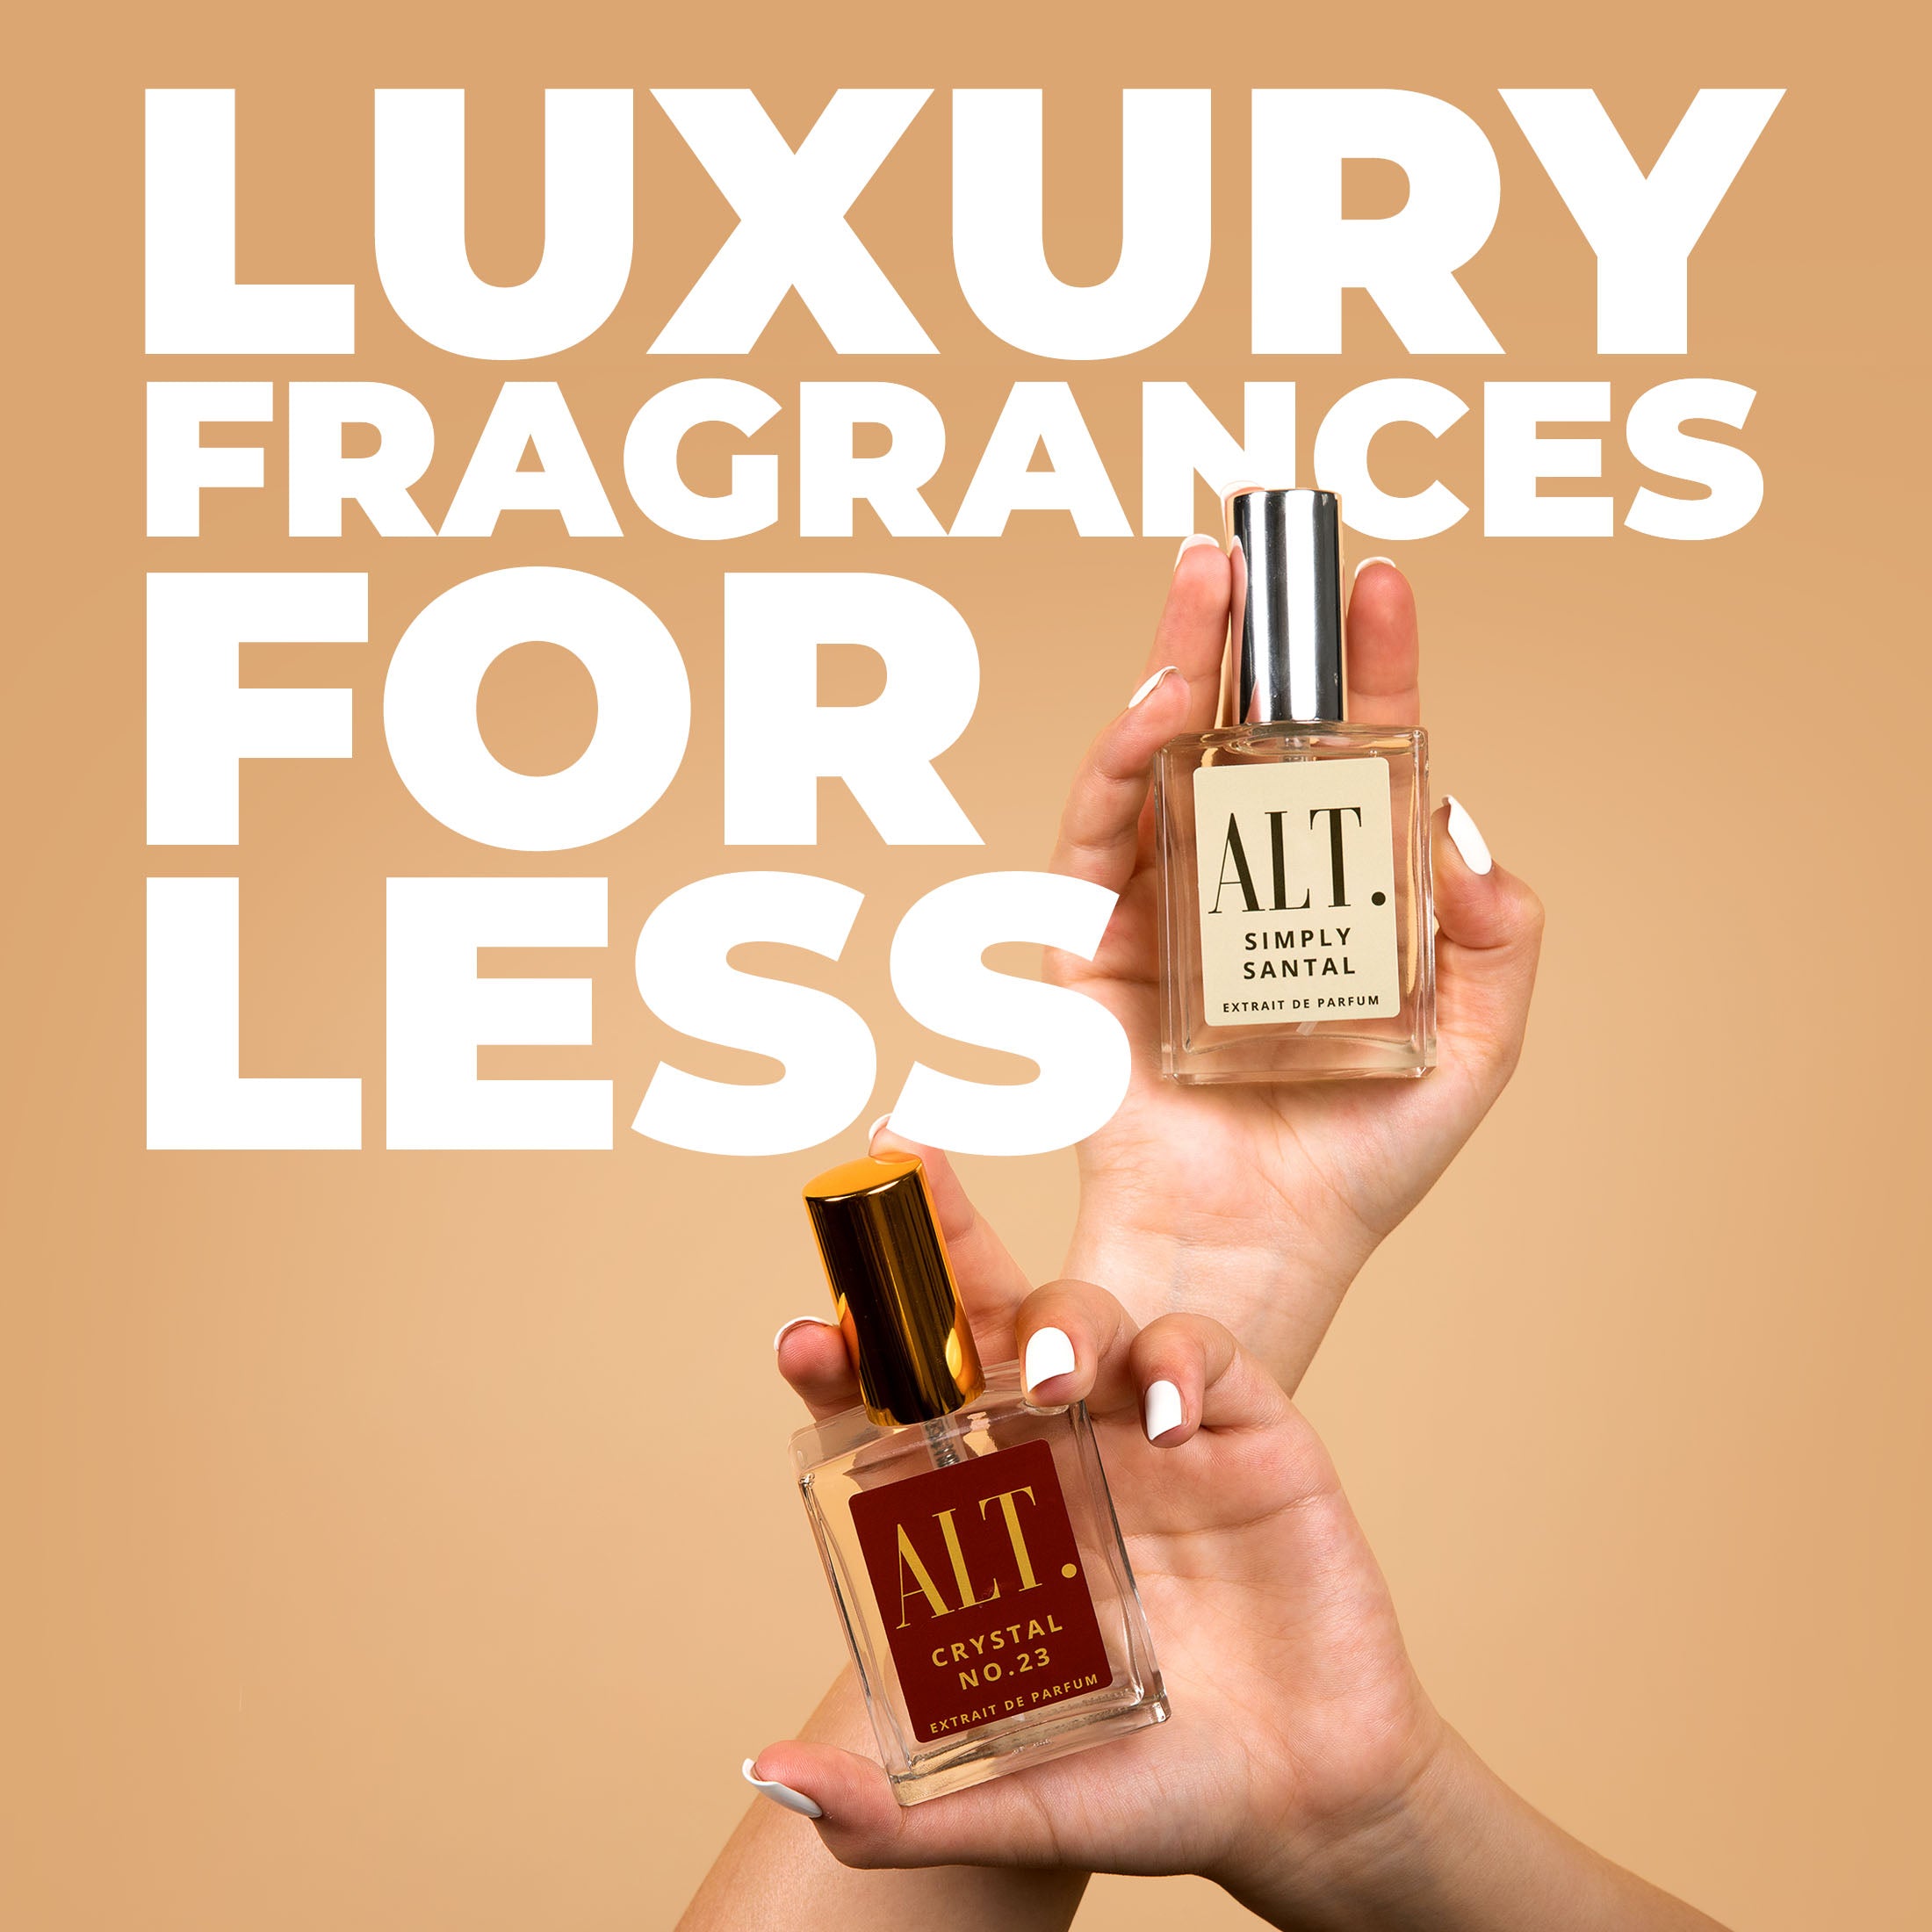 Luxury Fragrances For Less